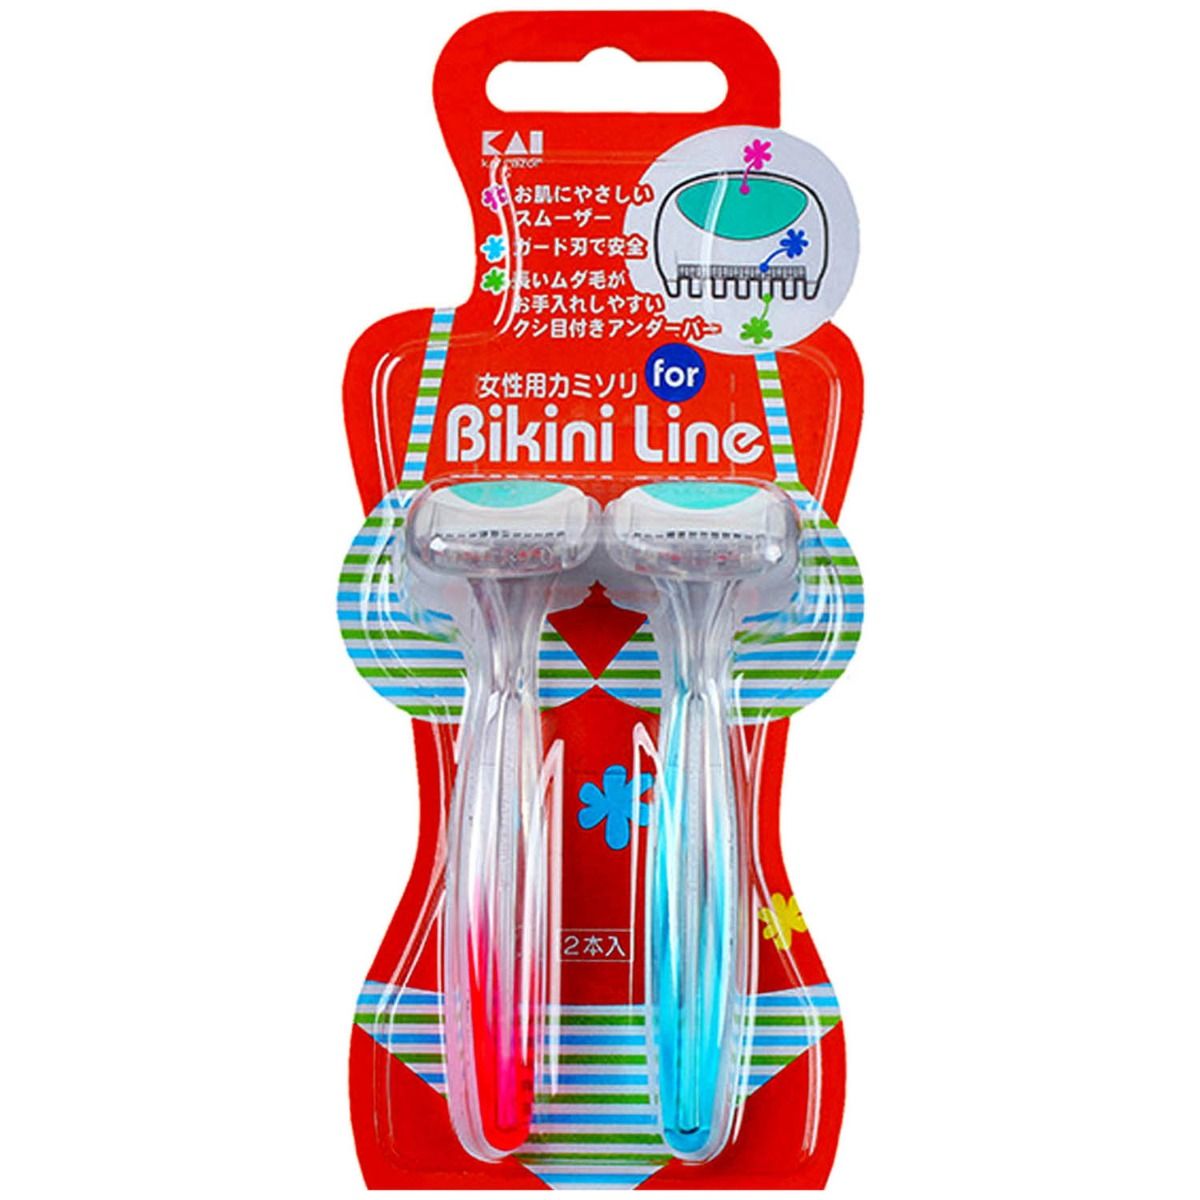 Buy Kai Bikini Line Razor Mtg-2b Online